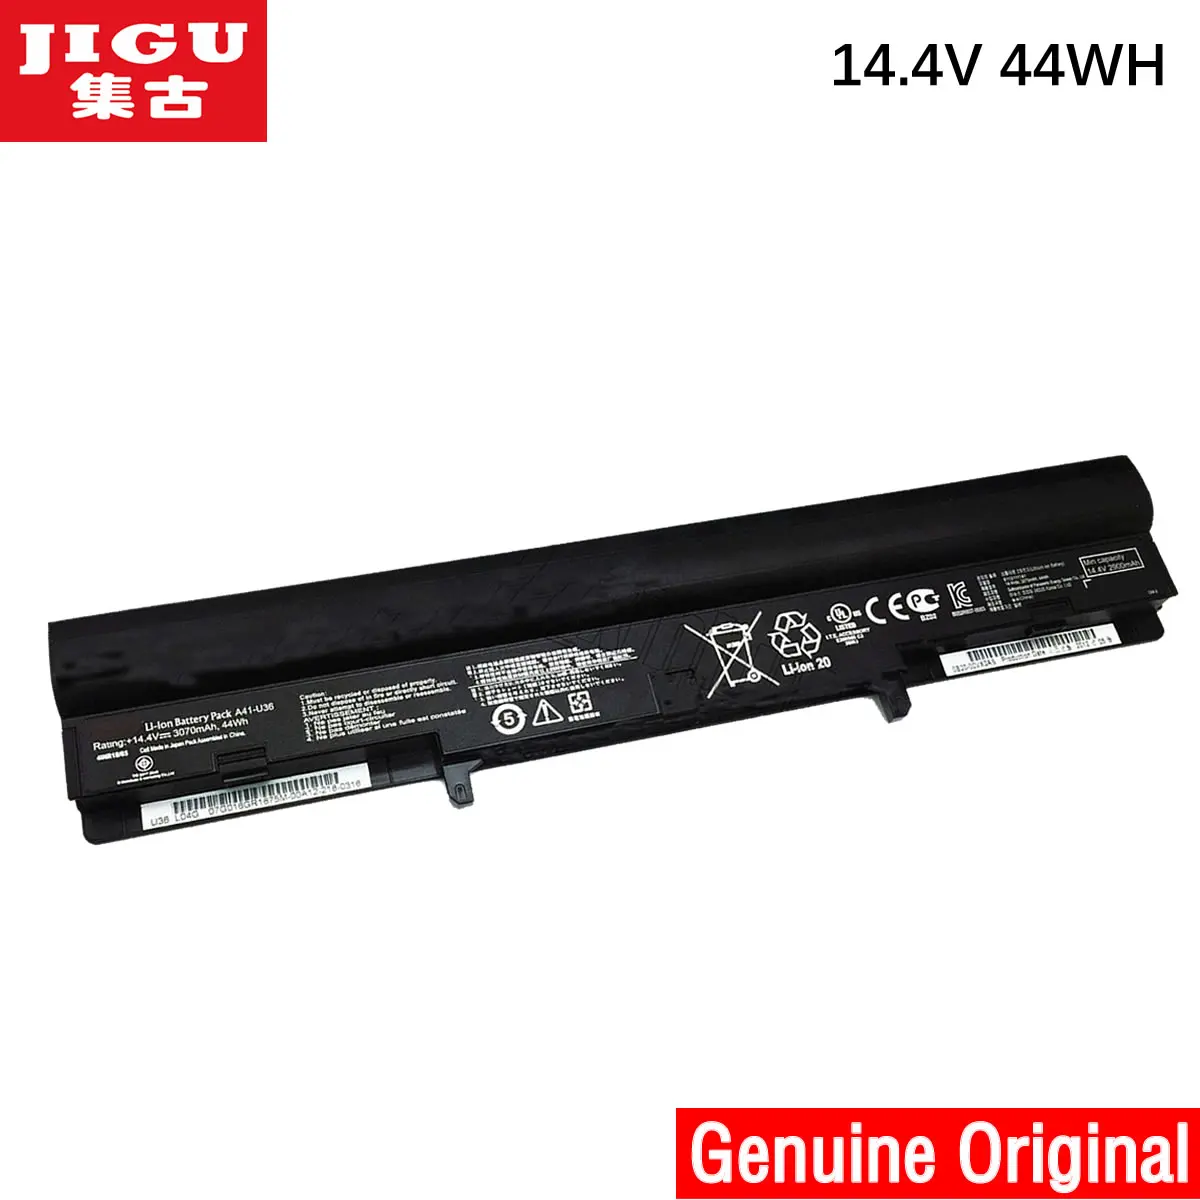 

JIGU 14.4V 44WH 90-N181B4000Y A41-U36 A42-U36 A32-U36 Original Laptop Battery For ASUS U32 U36 U36JC U36SG U36S U44 U82 Series